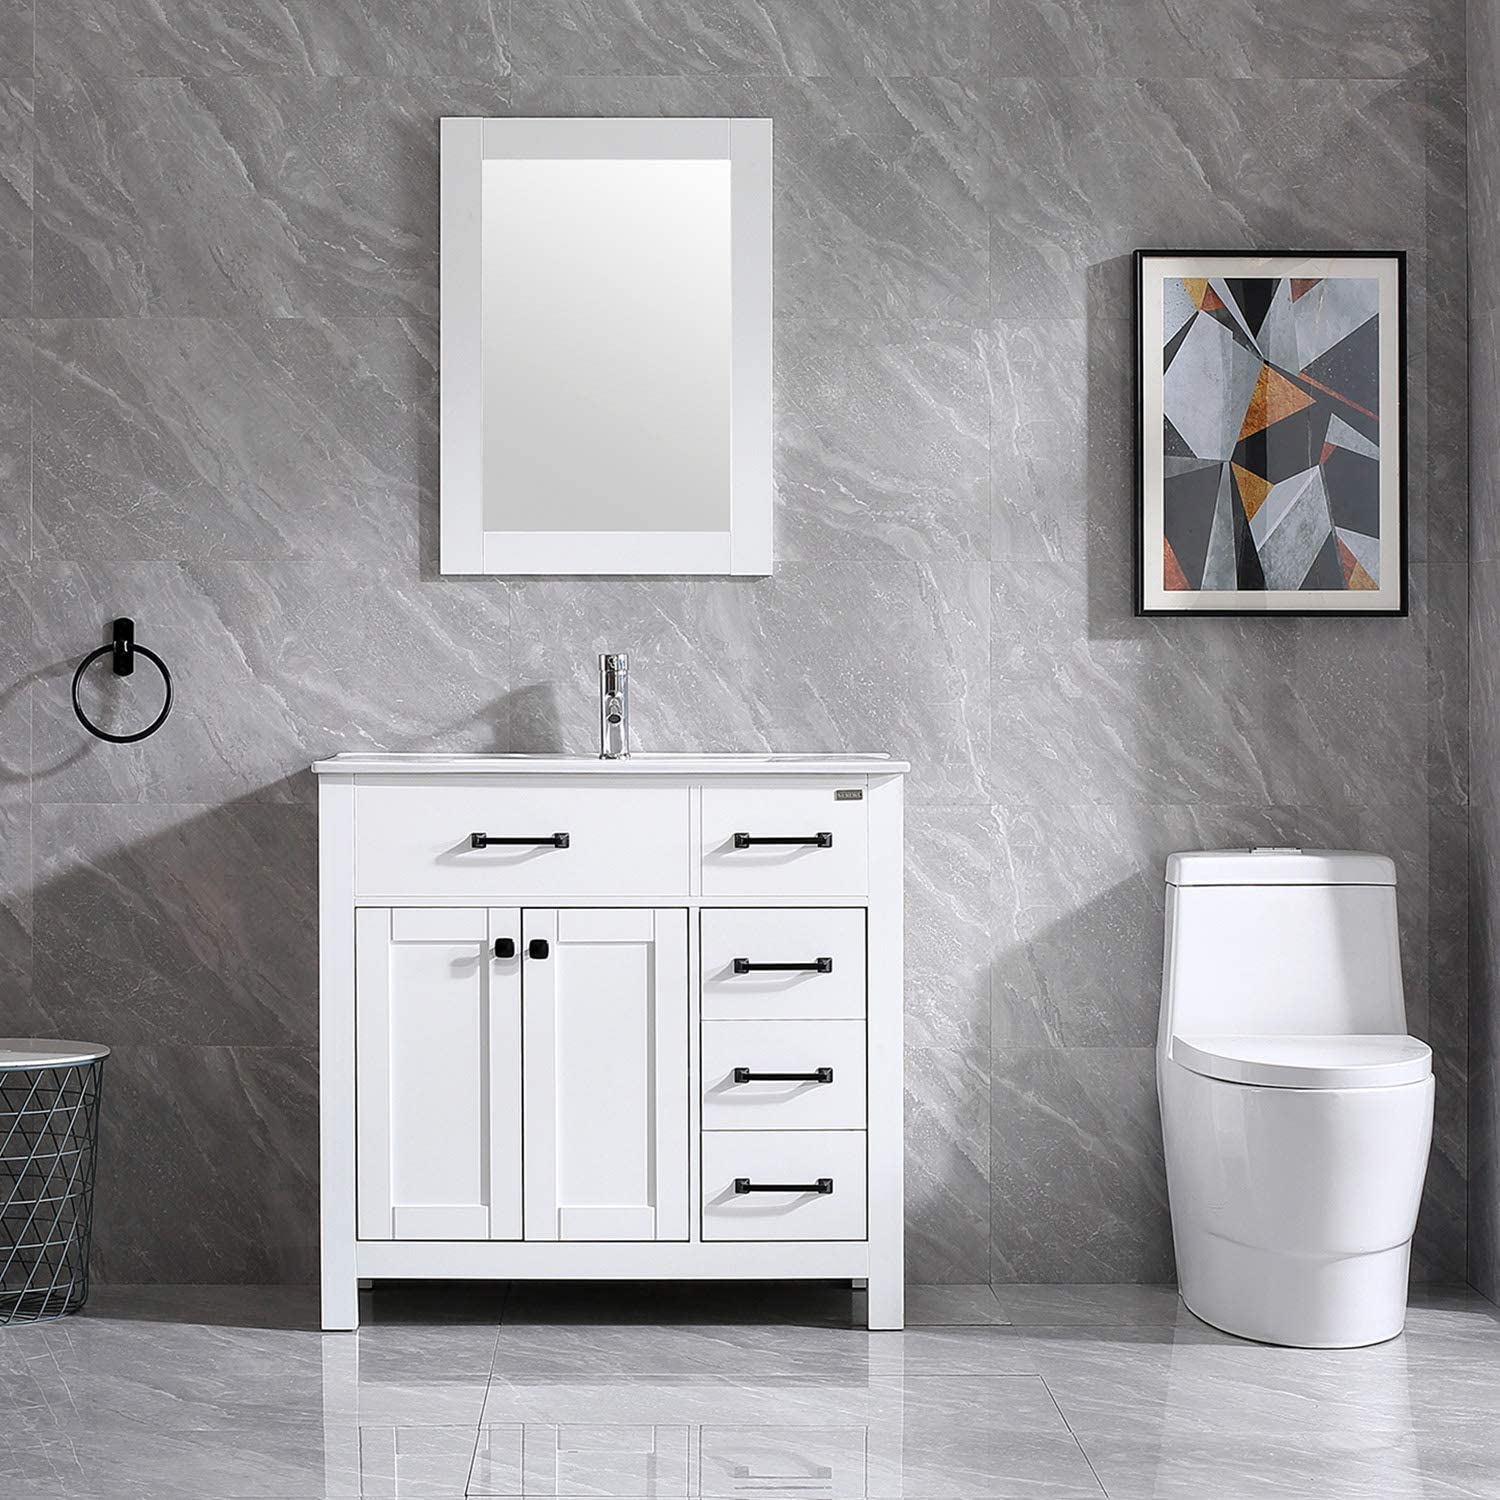 Walsport Easy Clean Ceramic Bathroom Vanity, 36-Inch